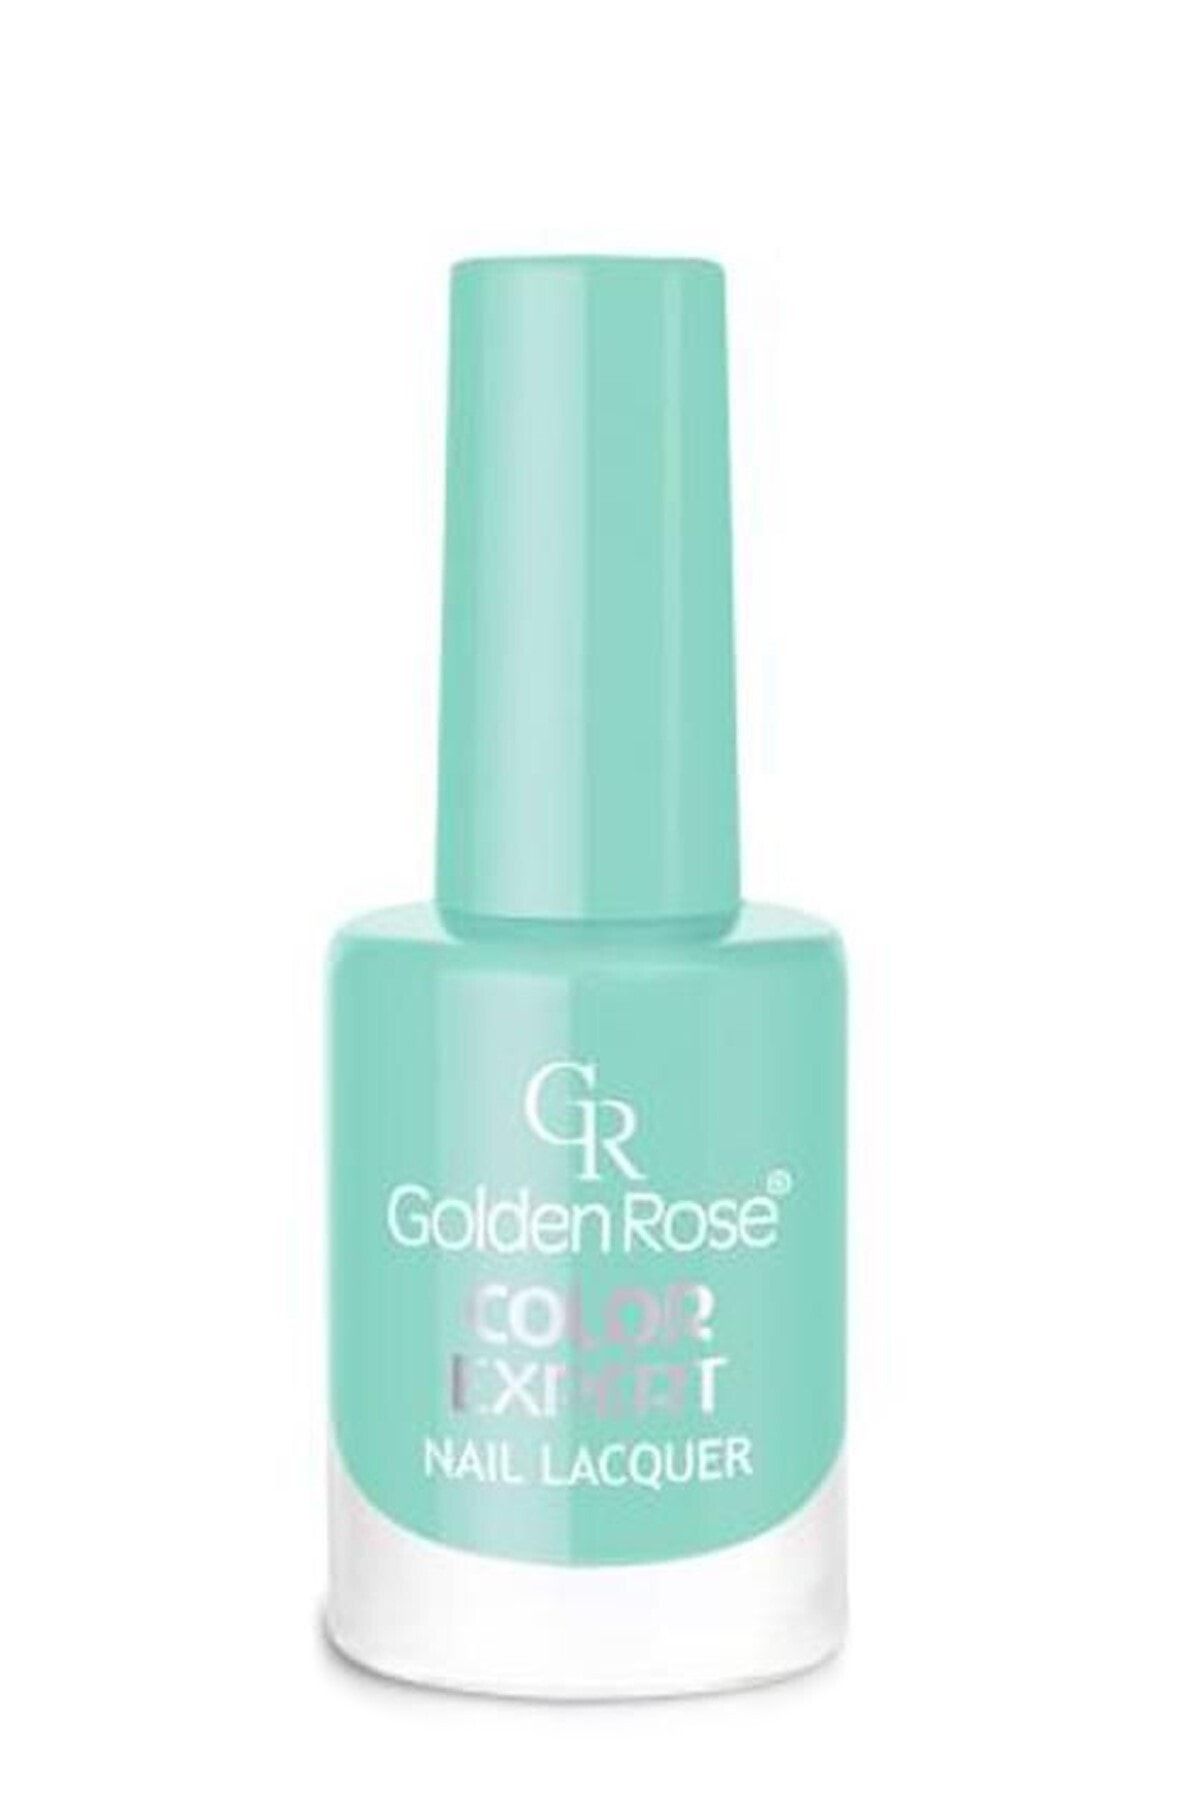 Golden Rose Oje - Color Expert Nail Lacquer No: 67 8691190703677